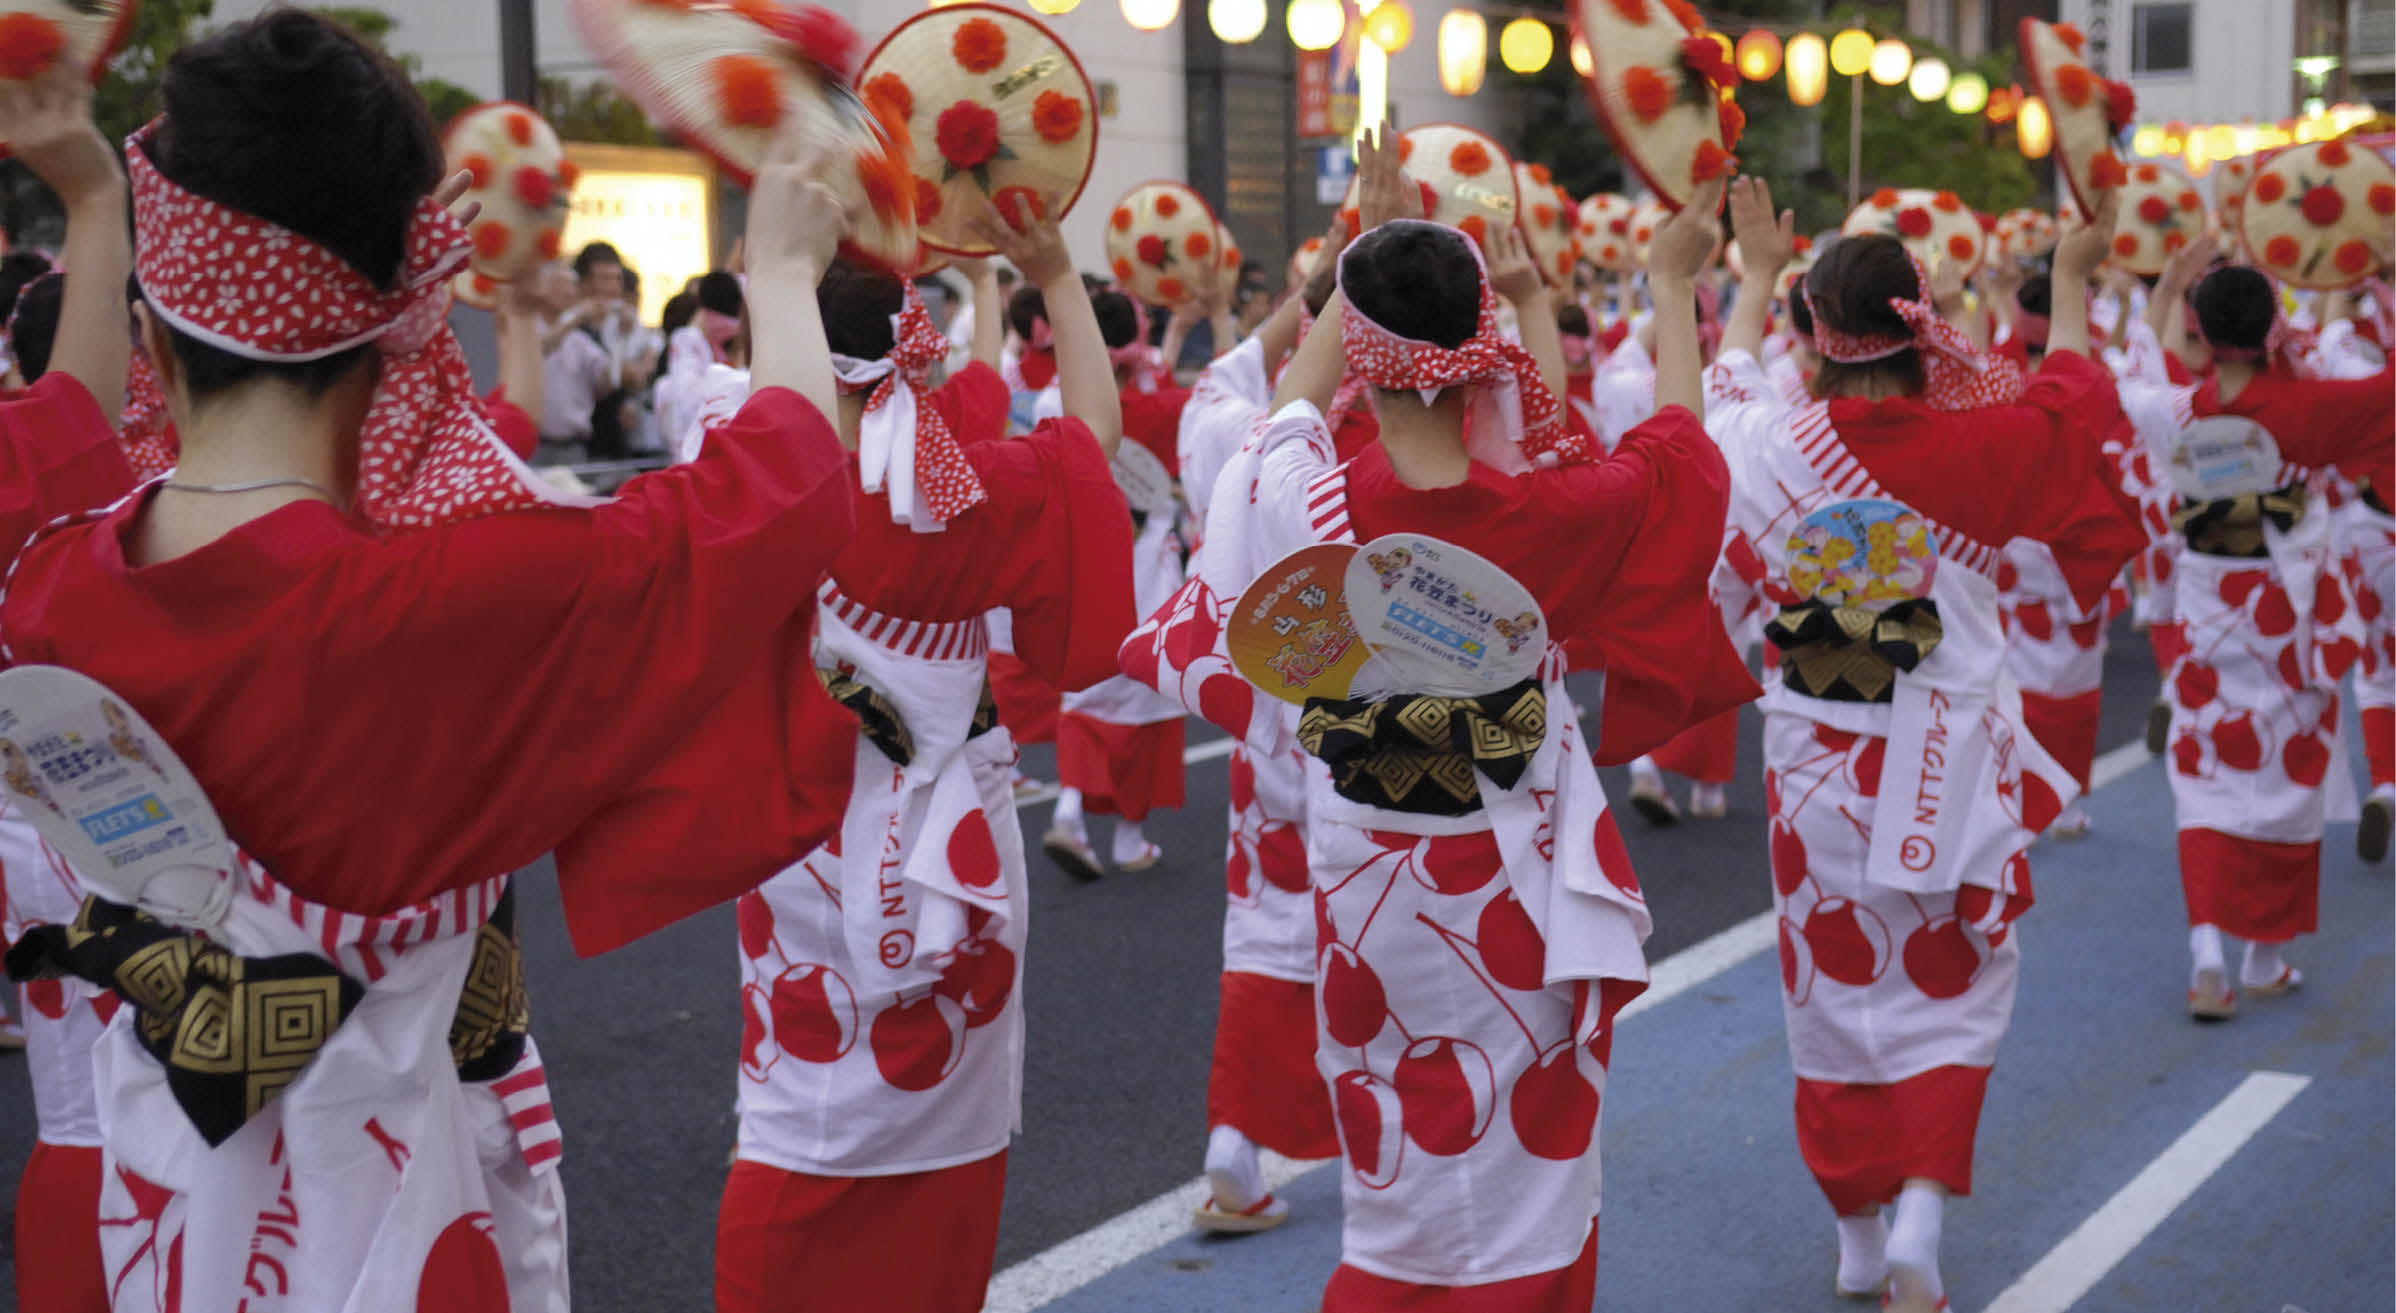 An Image of Hanagasa Festival